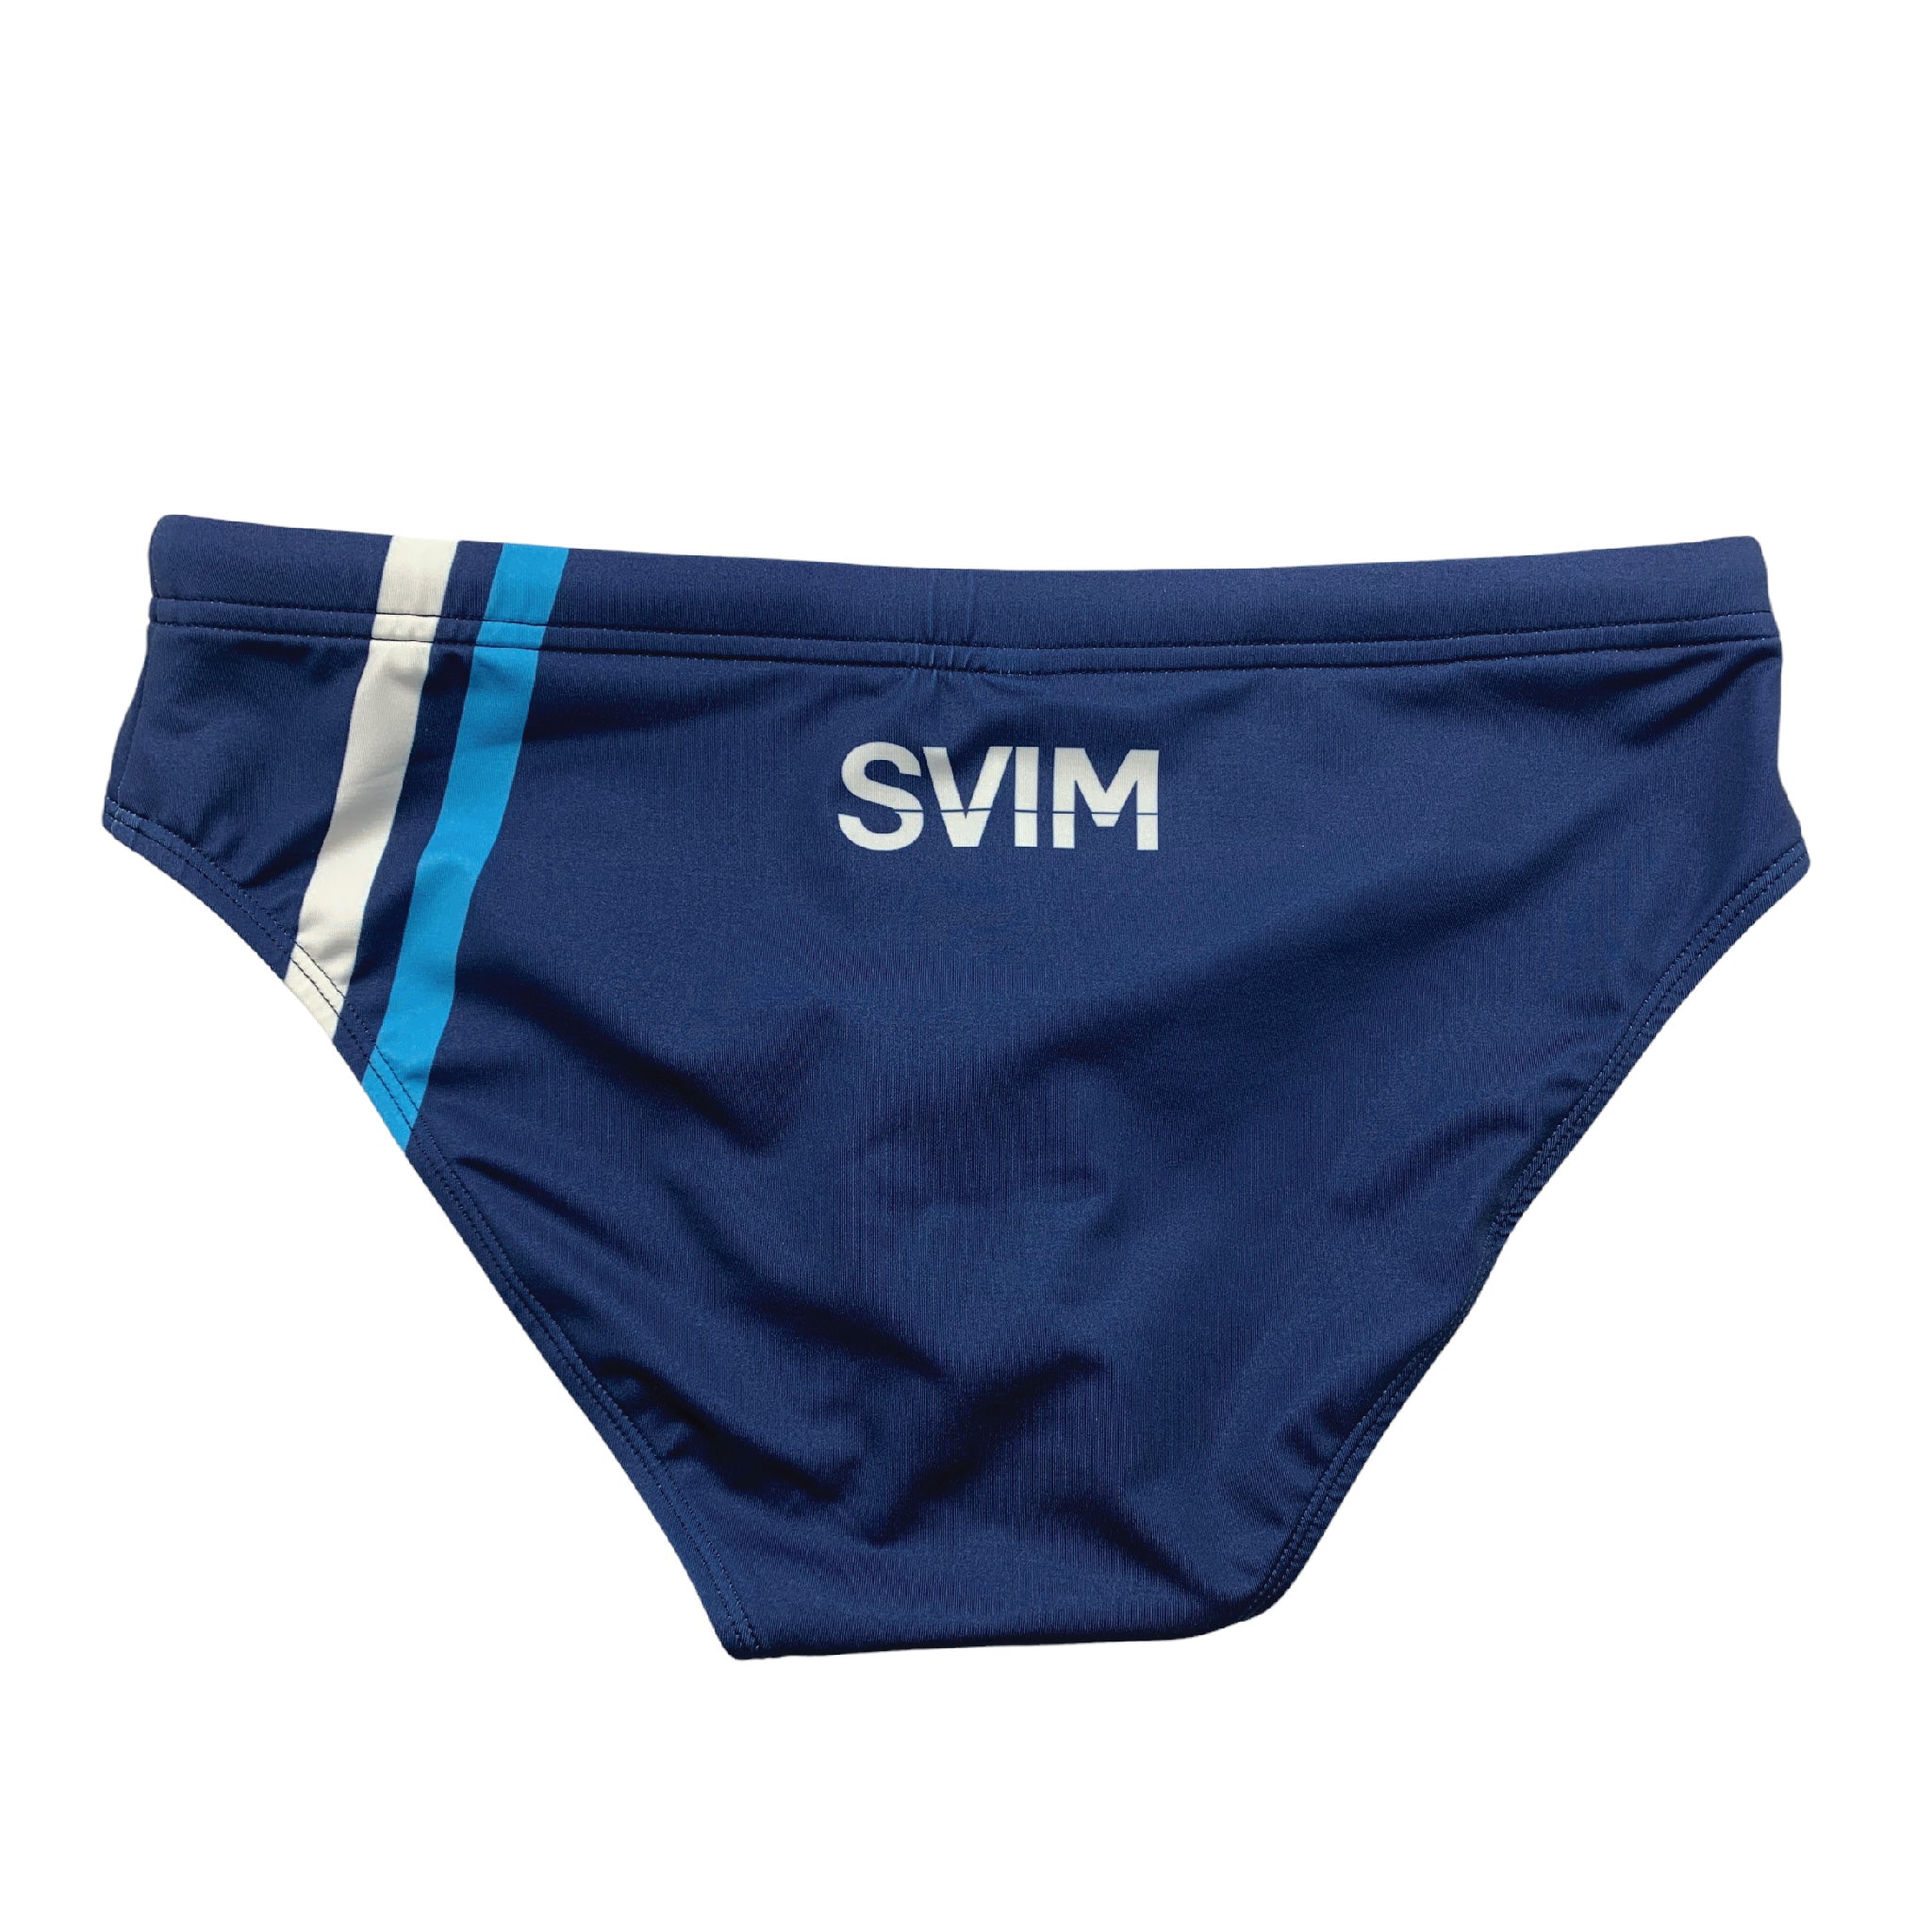 Sustainable swim briefs for men